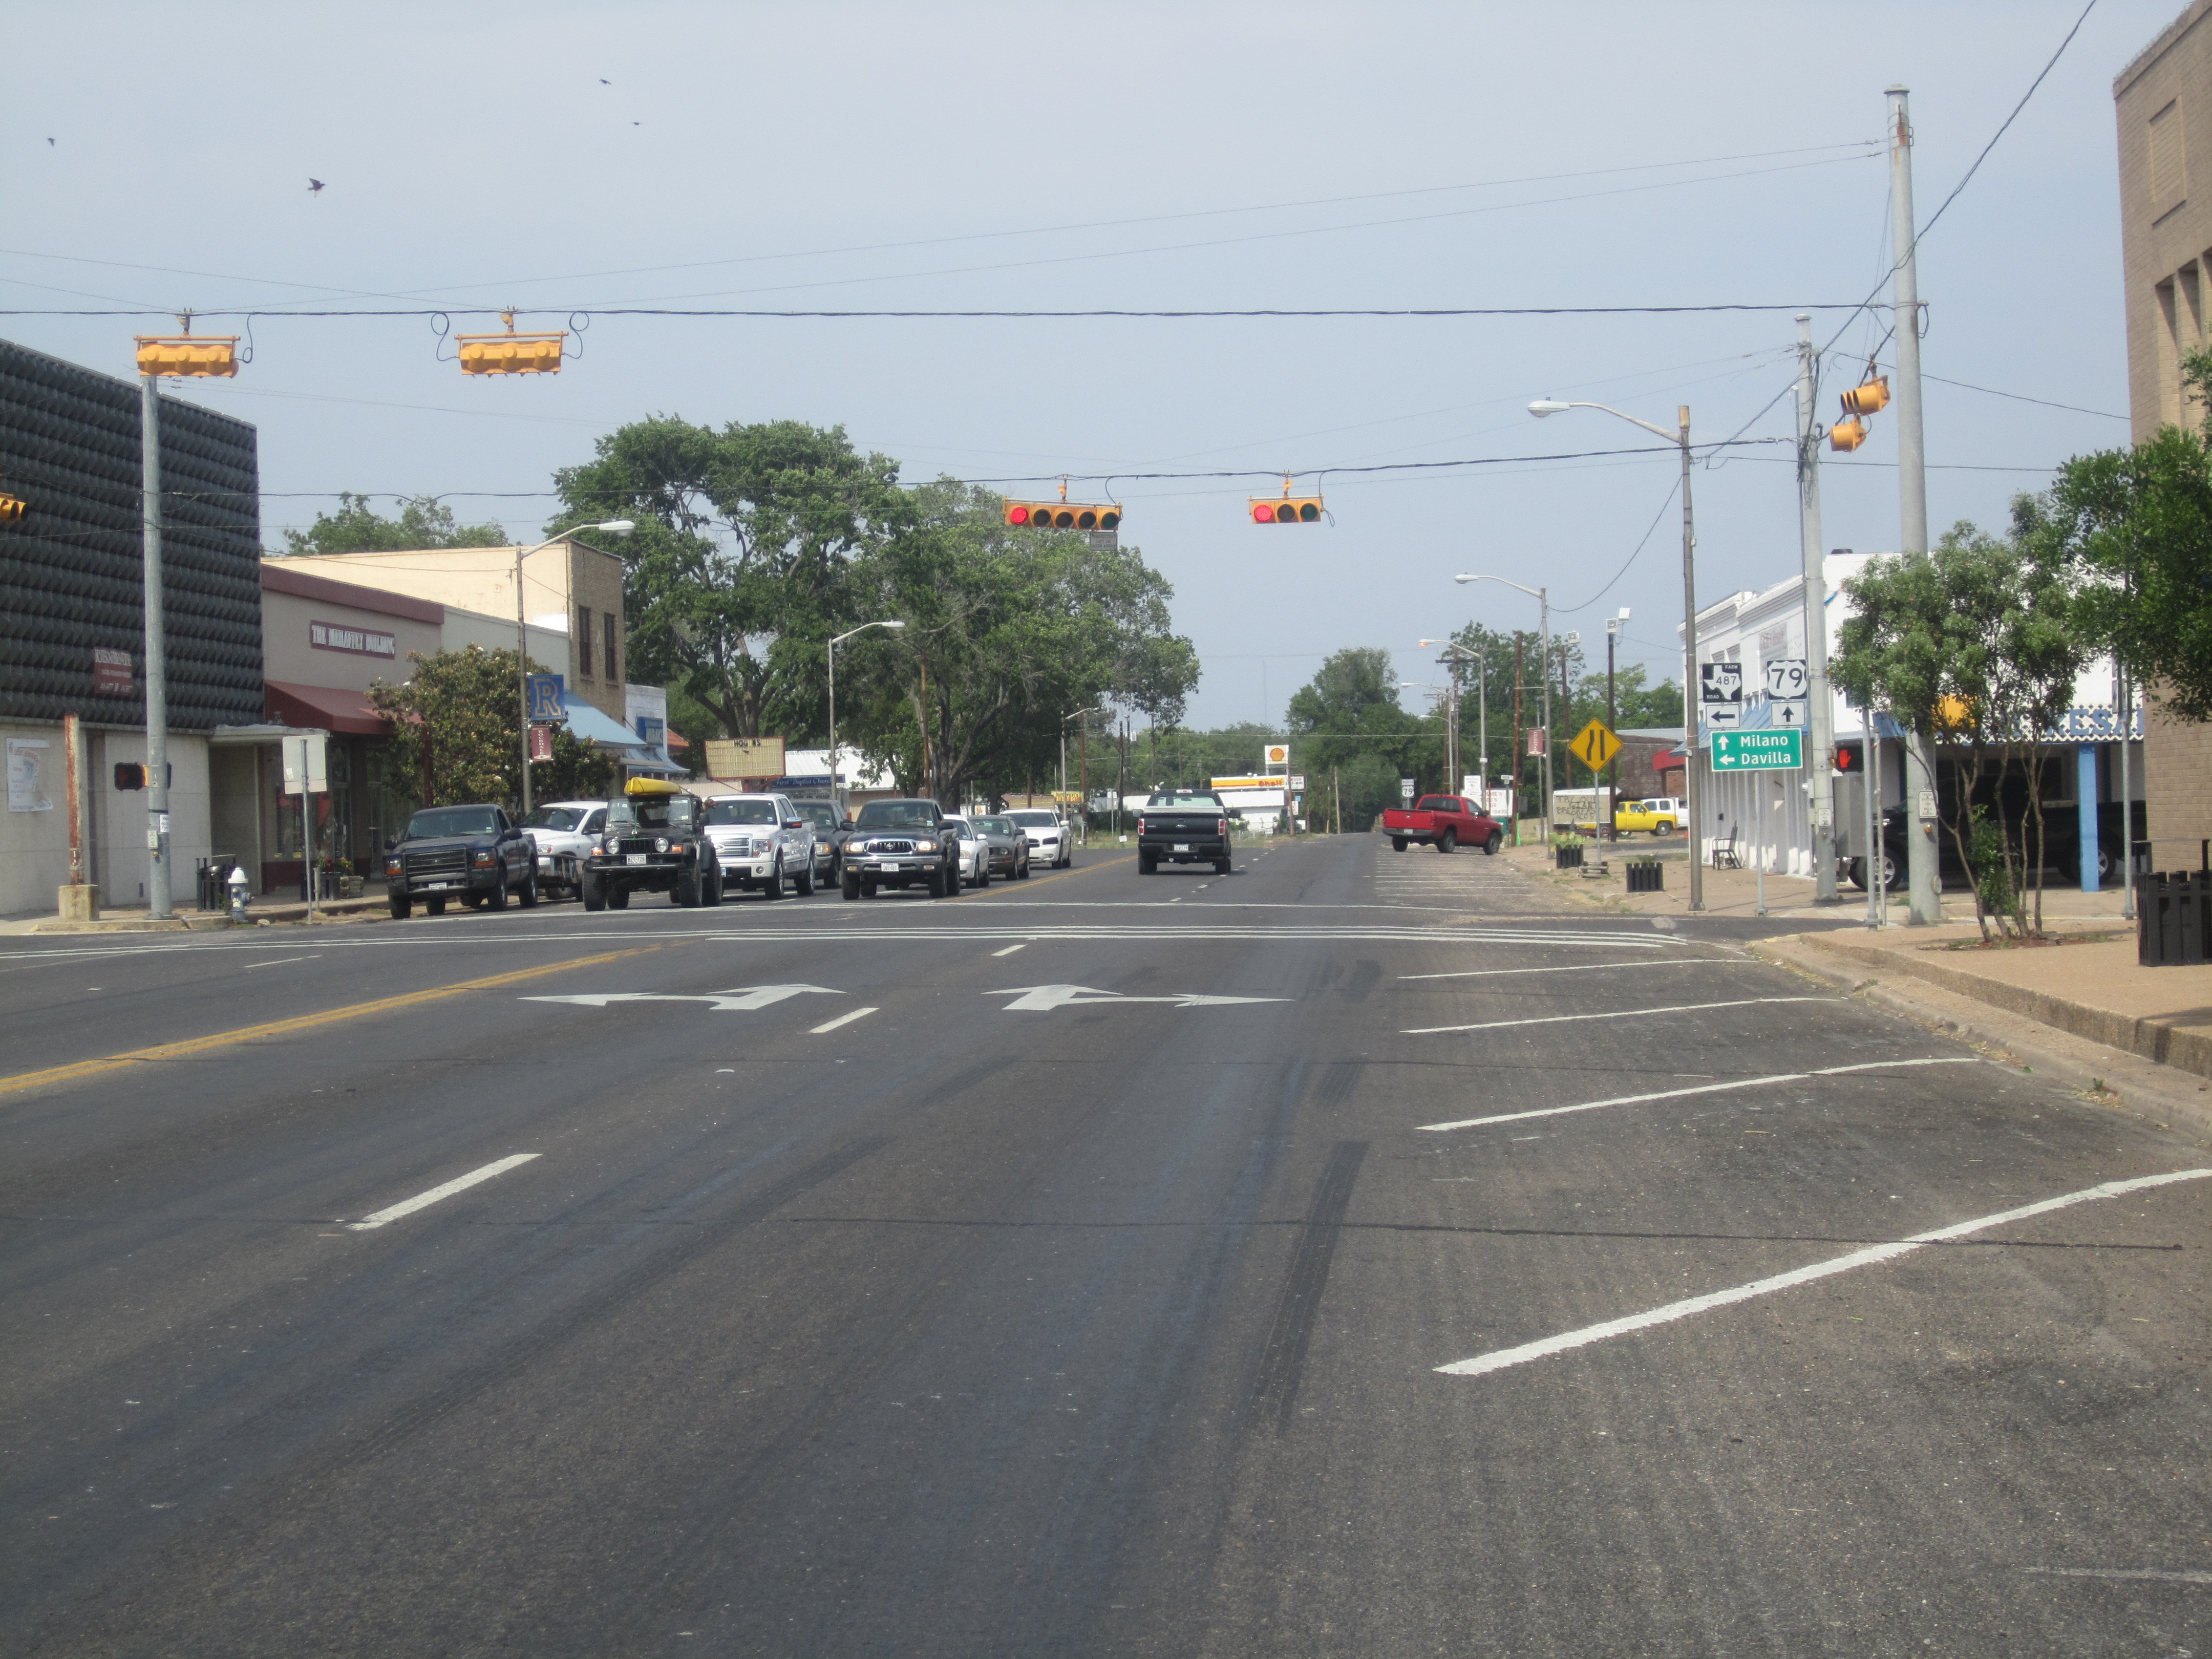 Файл: U.S. Route 79 is main street of Rockdale, TX IMG 2255.JPG - Wikimedia Commons